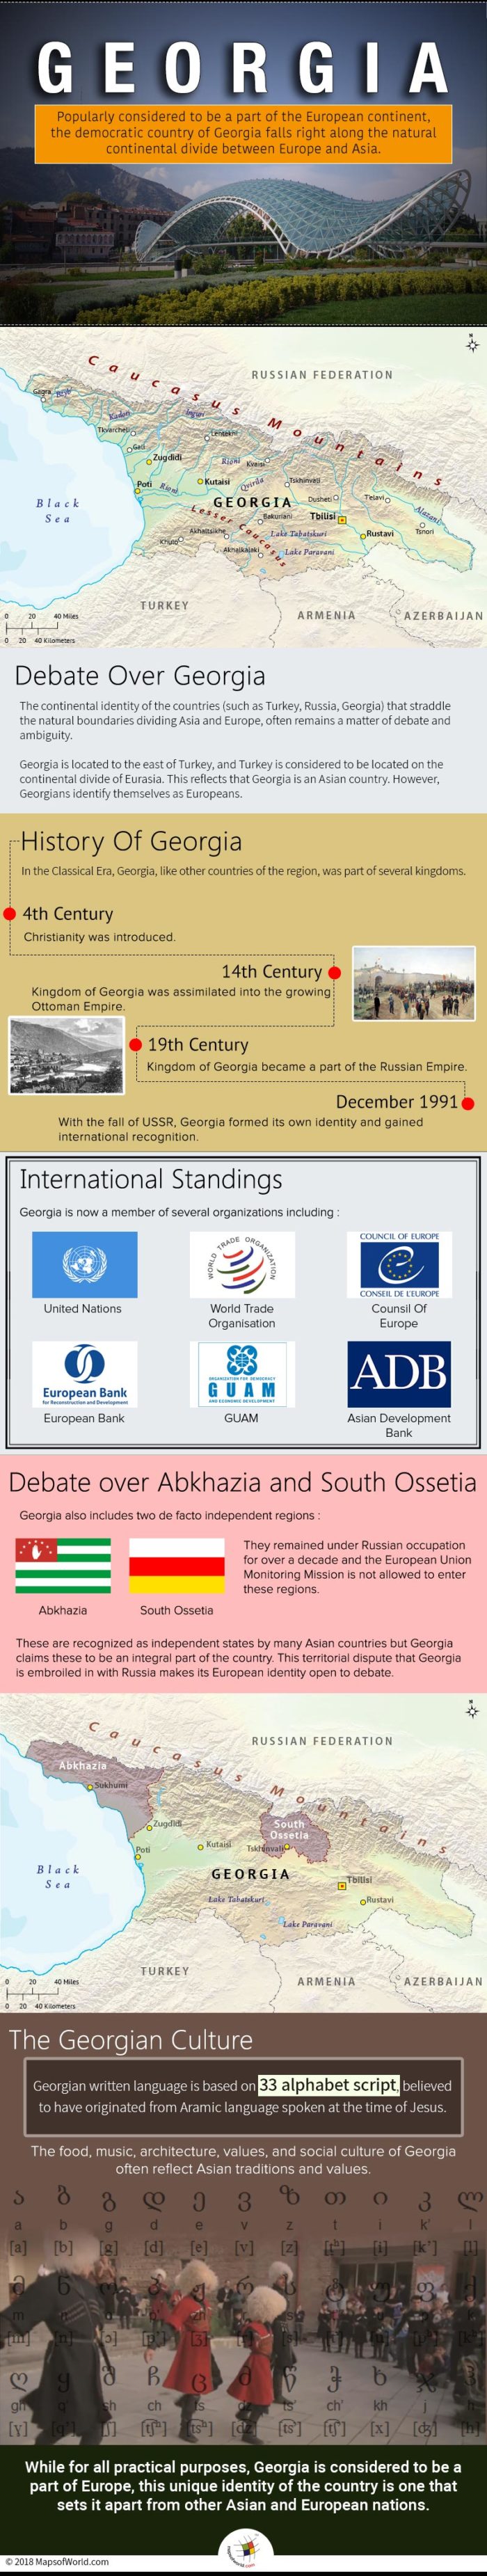 Infographic elaborating the continental identity of Georgia